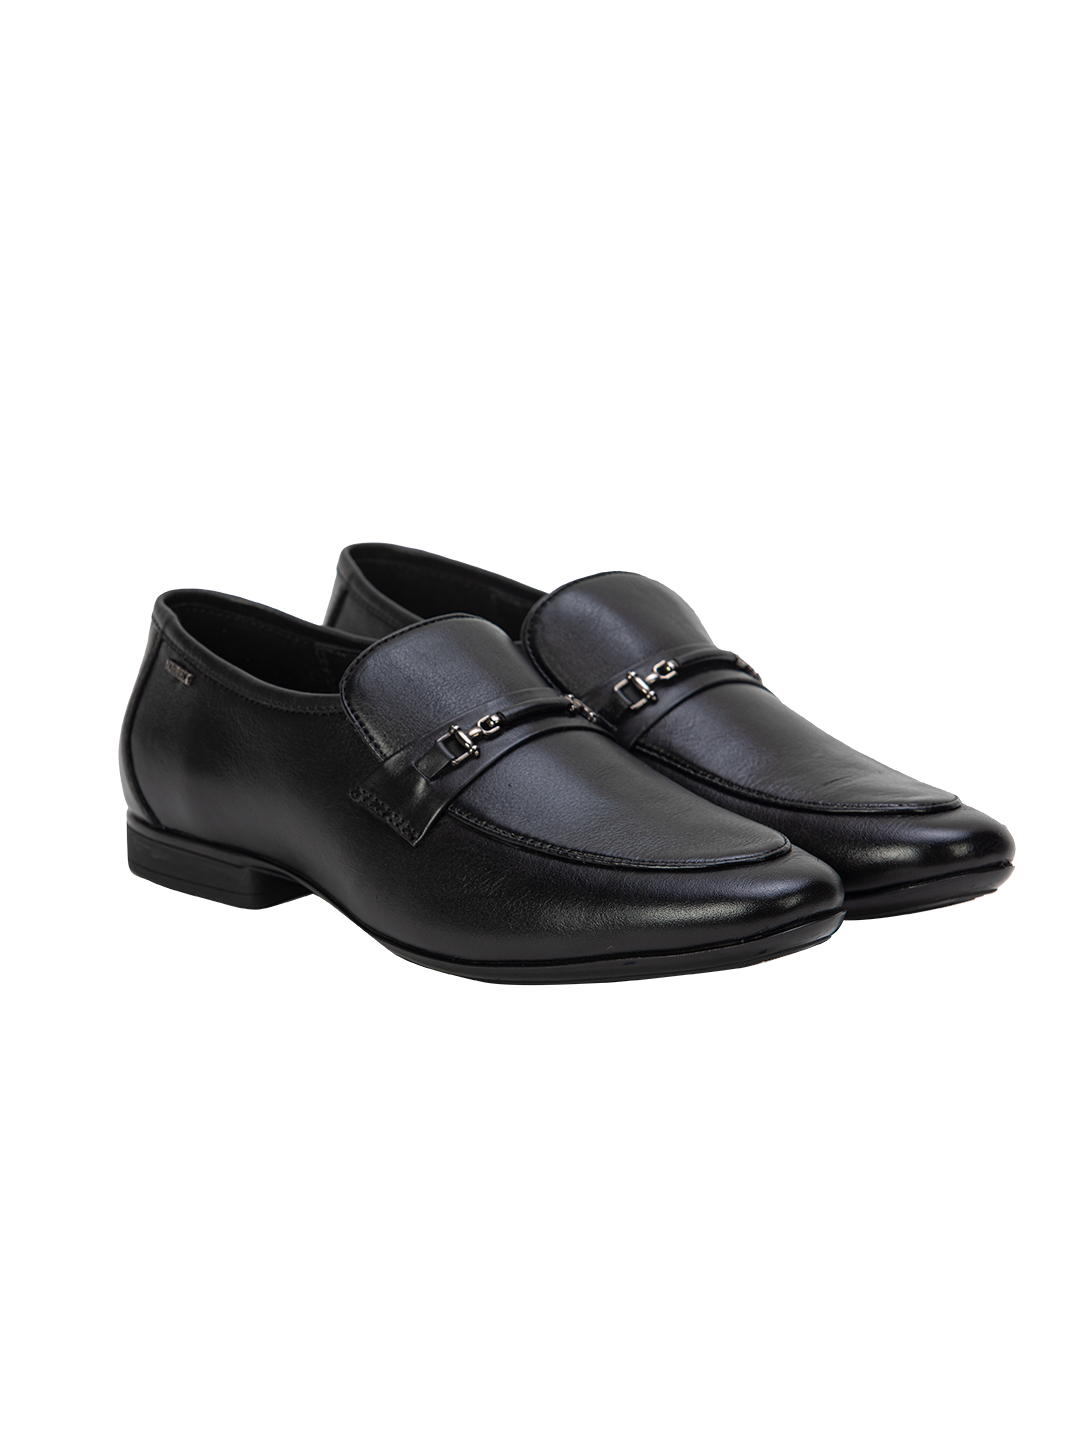 Buy Von Wellx Germany Comfort Black Glib Shoes Online in Hyderabad